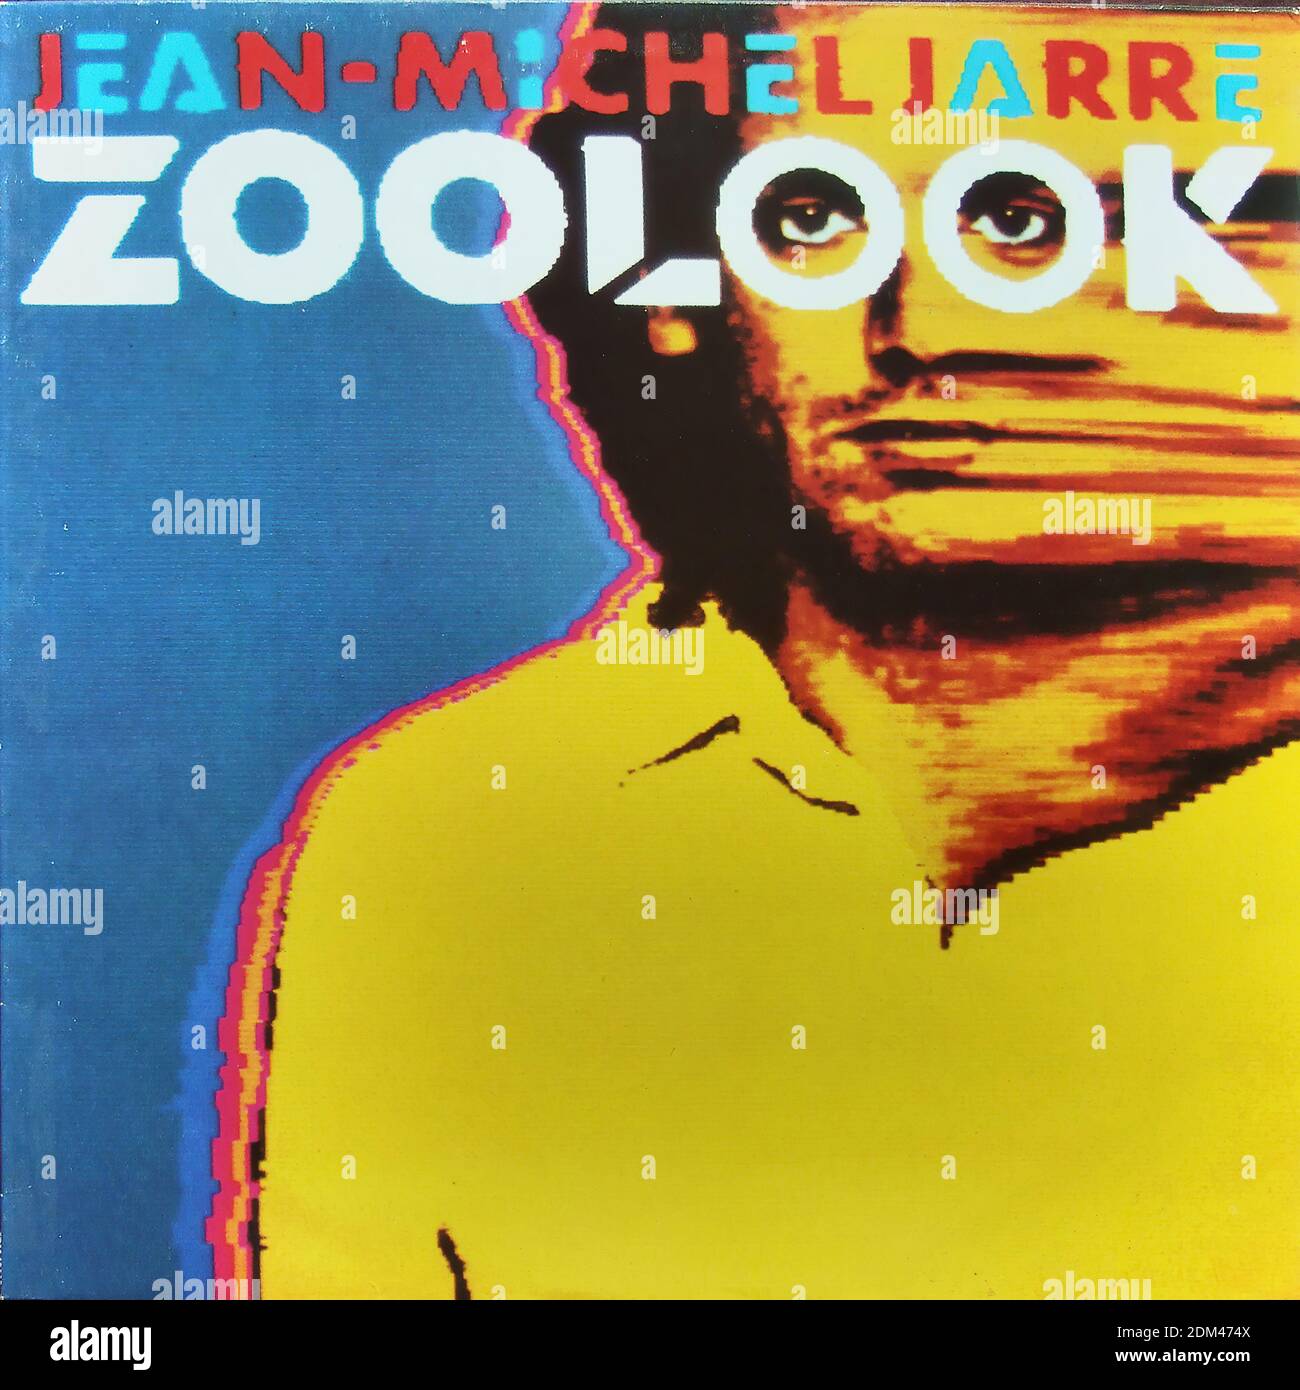 Jean-Michel Jarre - Zoolook - Vintage vinyl album cover Stock Photo - Alamy